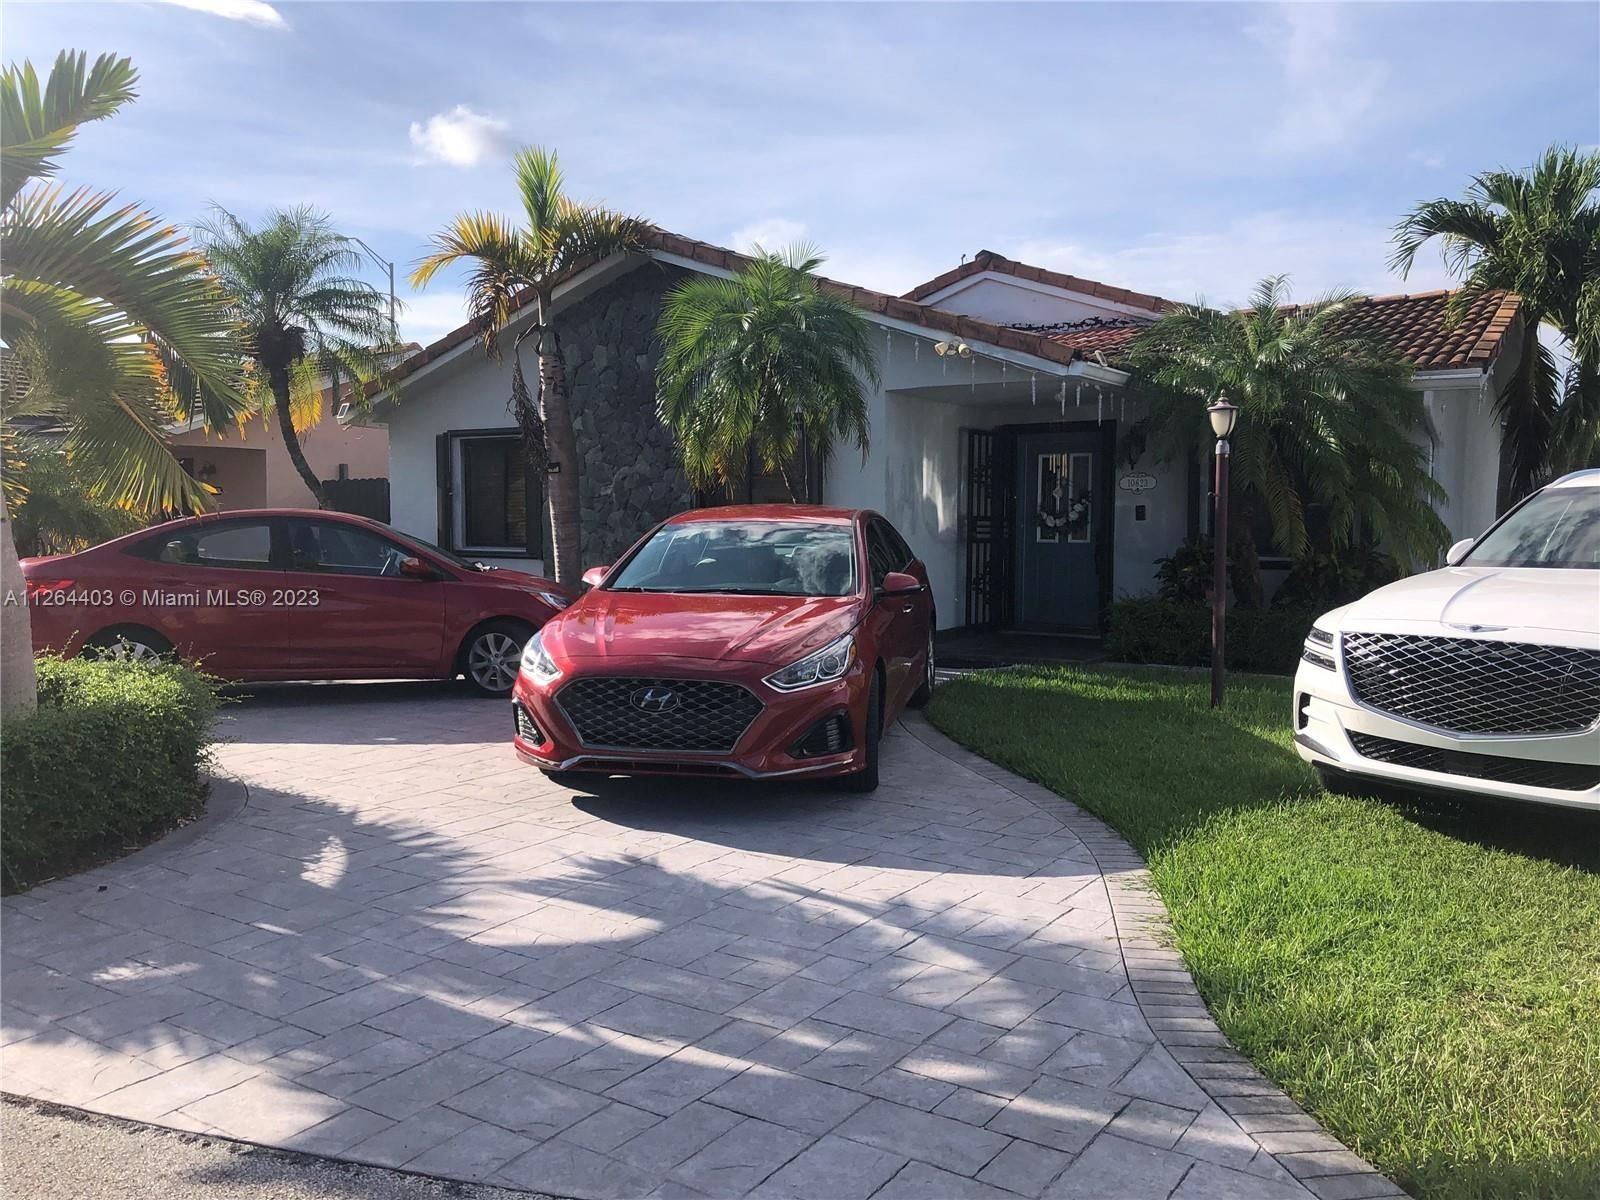 Real estate property located at 10623 69th Ter, Miami-Dade County, Miami, FL